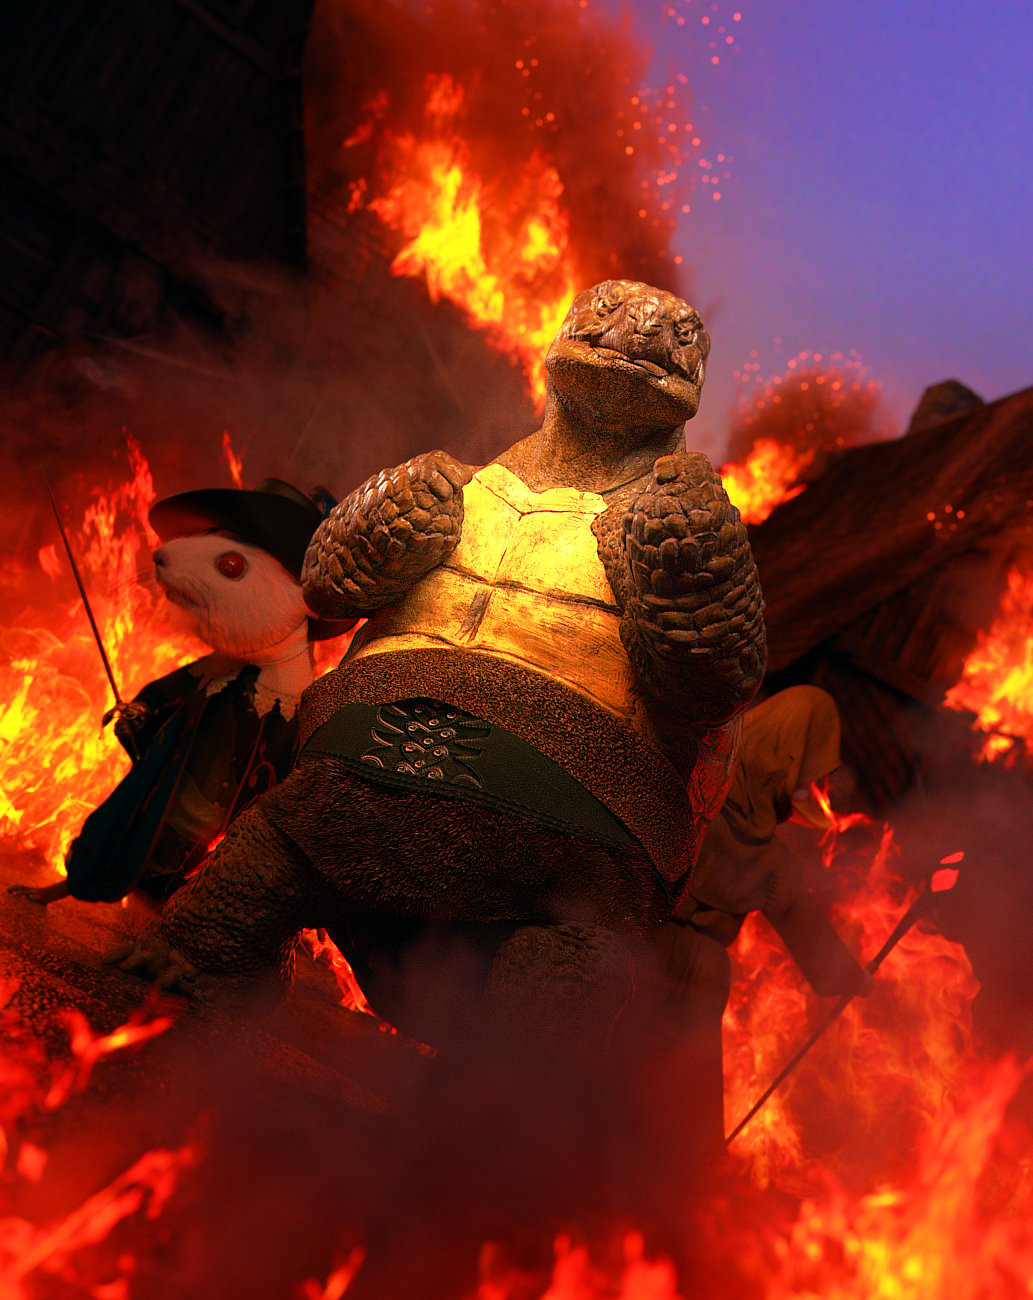 Storybook Turtle HD for Genesis 8.1 Males by: JoeQuick, 3D Models by Daz 3D